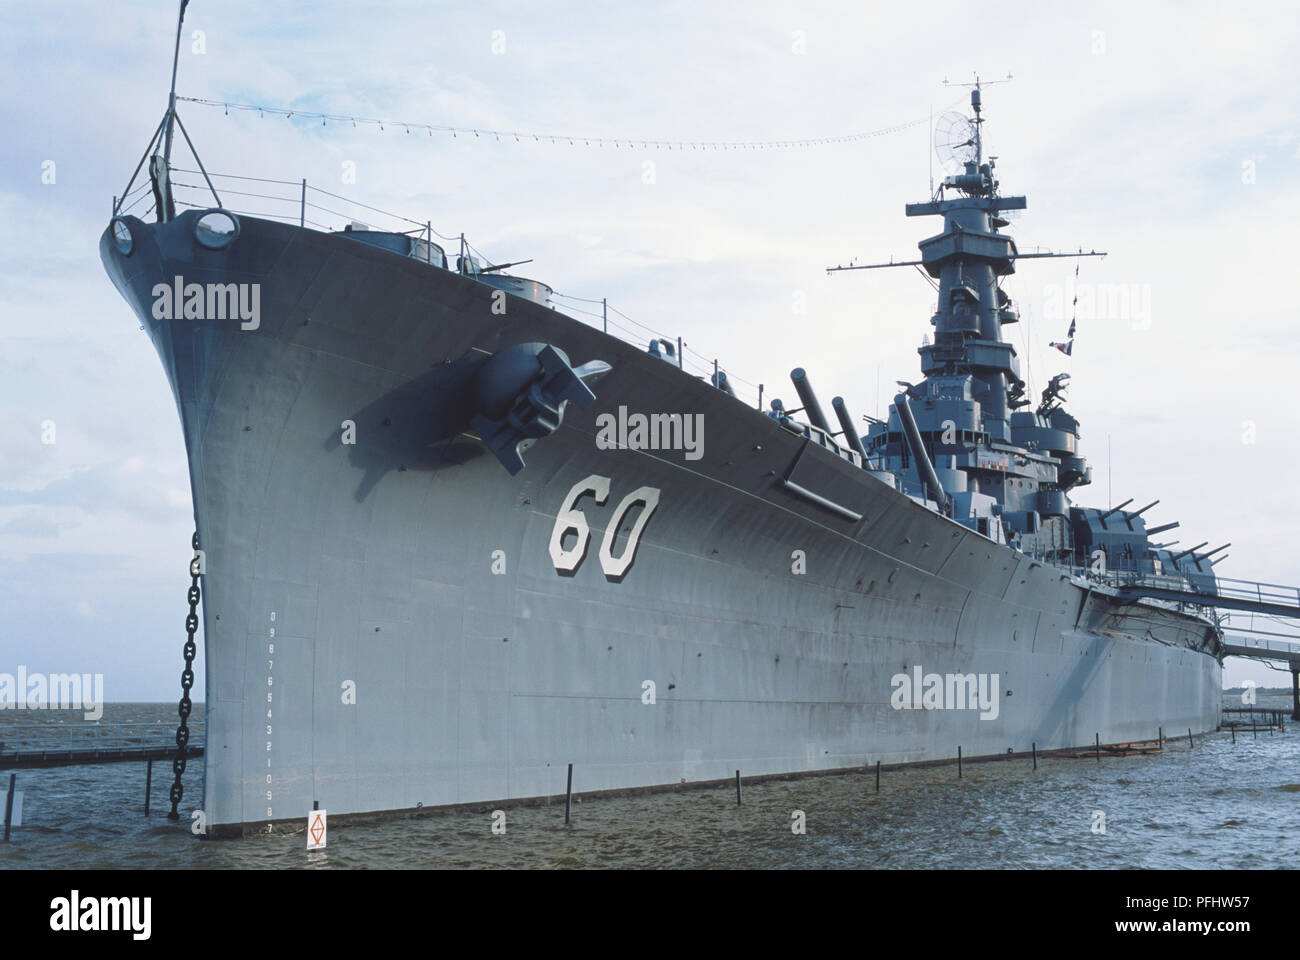 USA, Alabama, Mobile, Fort Conde, the World War II ship 'USS Alabama', front view Stock Photo